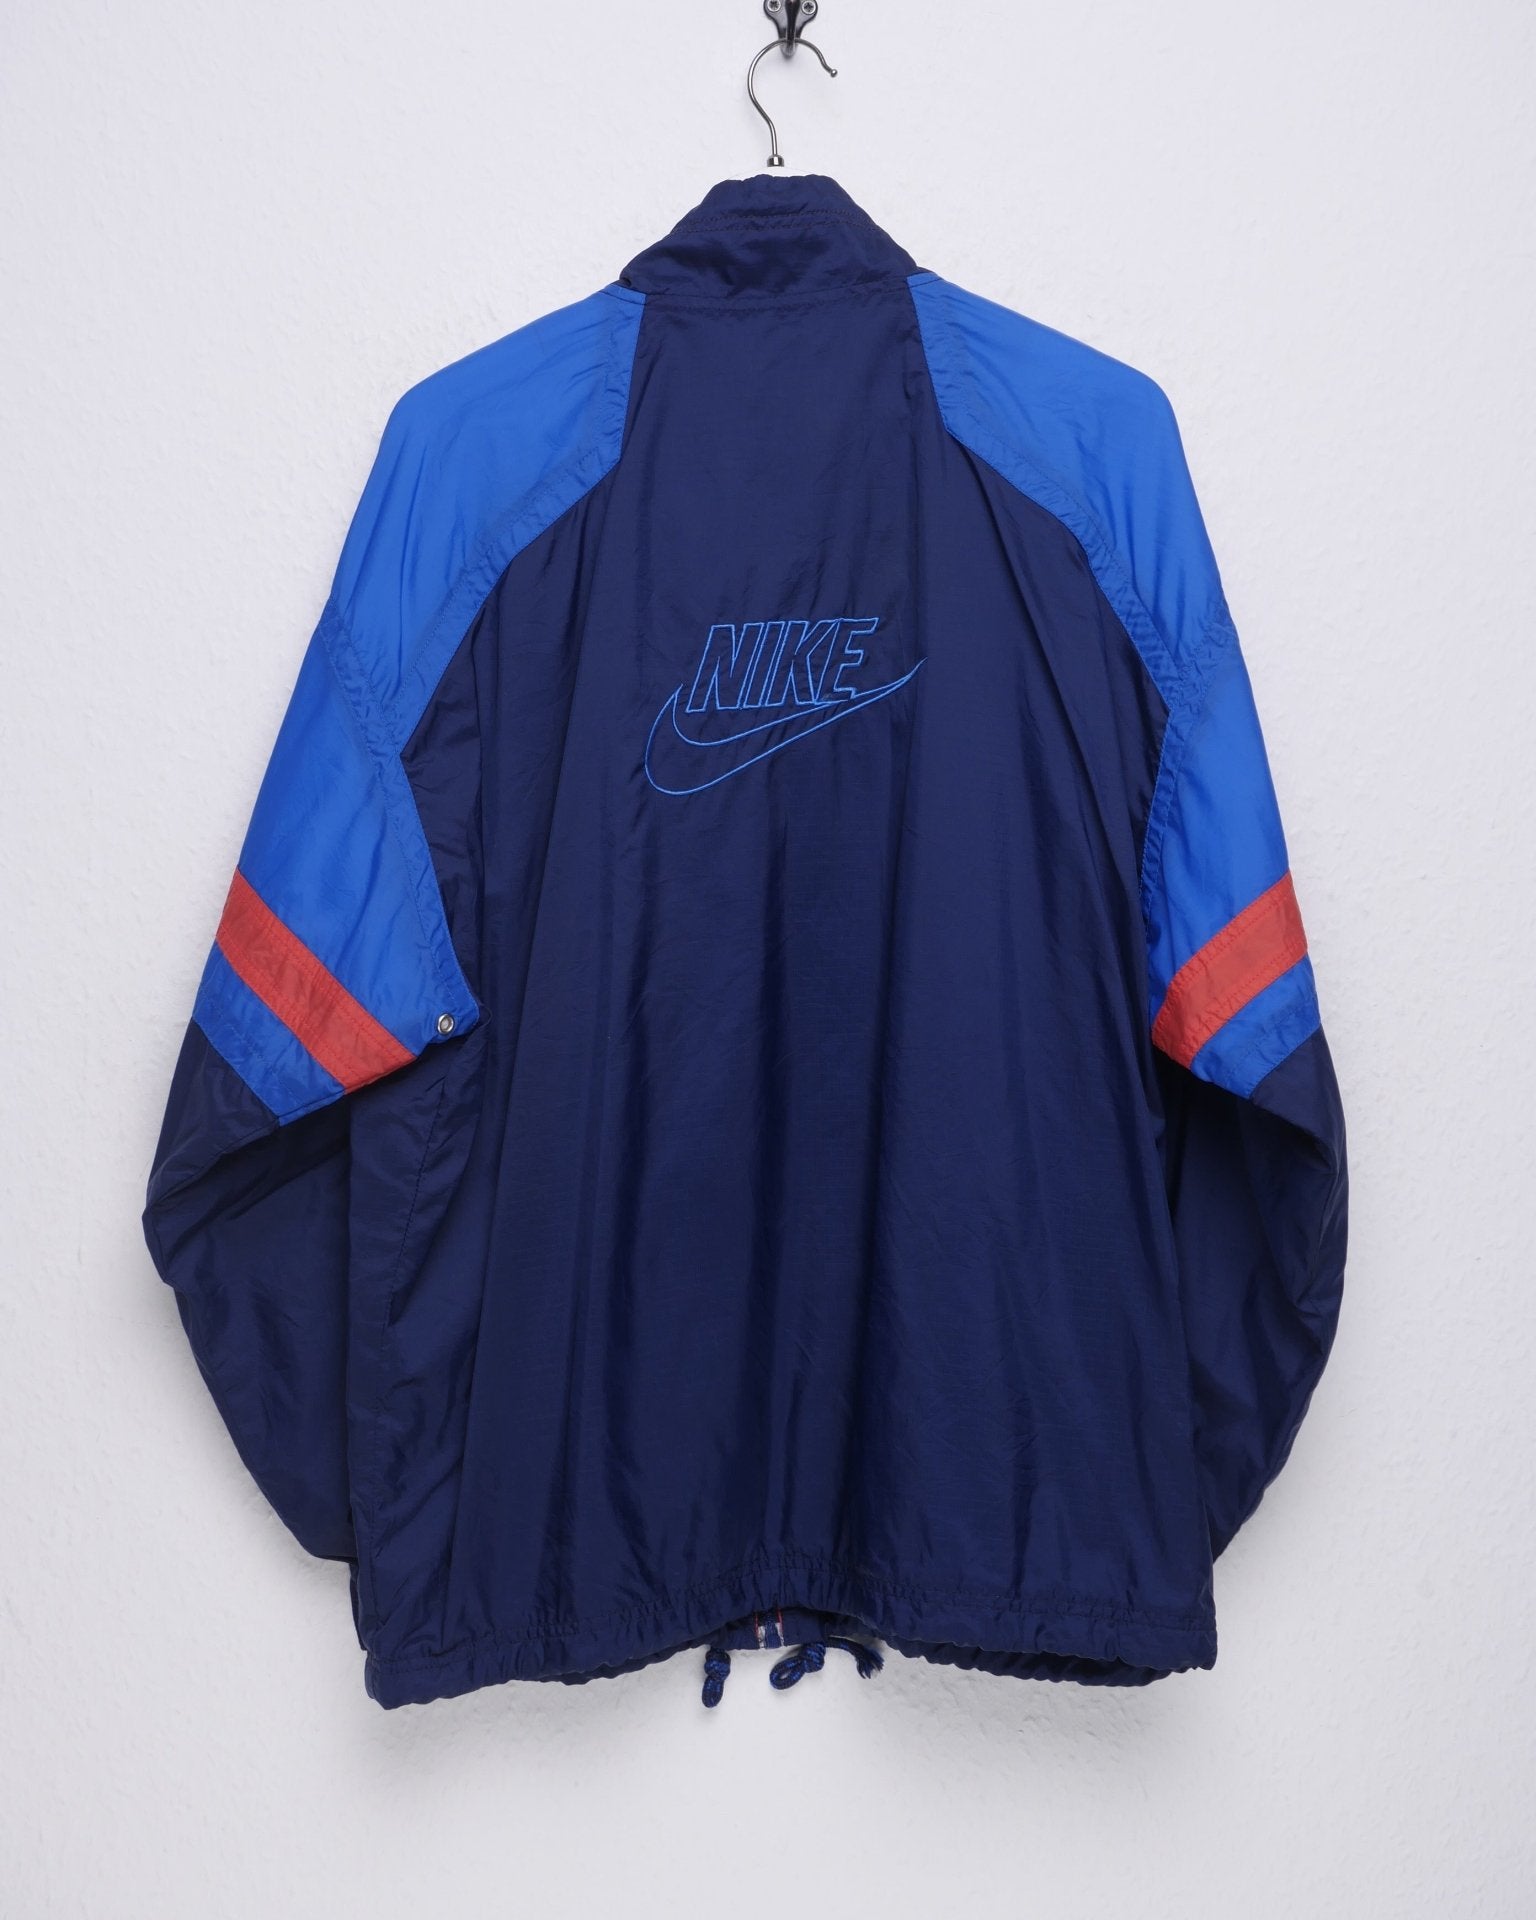 Nike embroidered Logo Vintage Track Jacke - Peeces